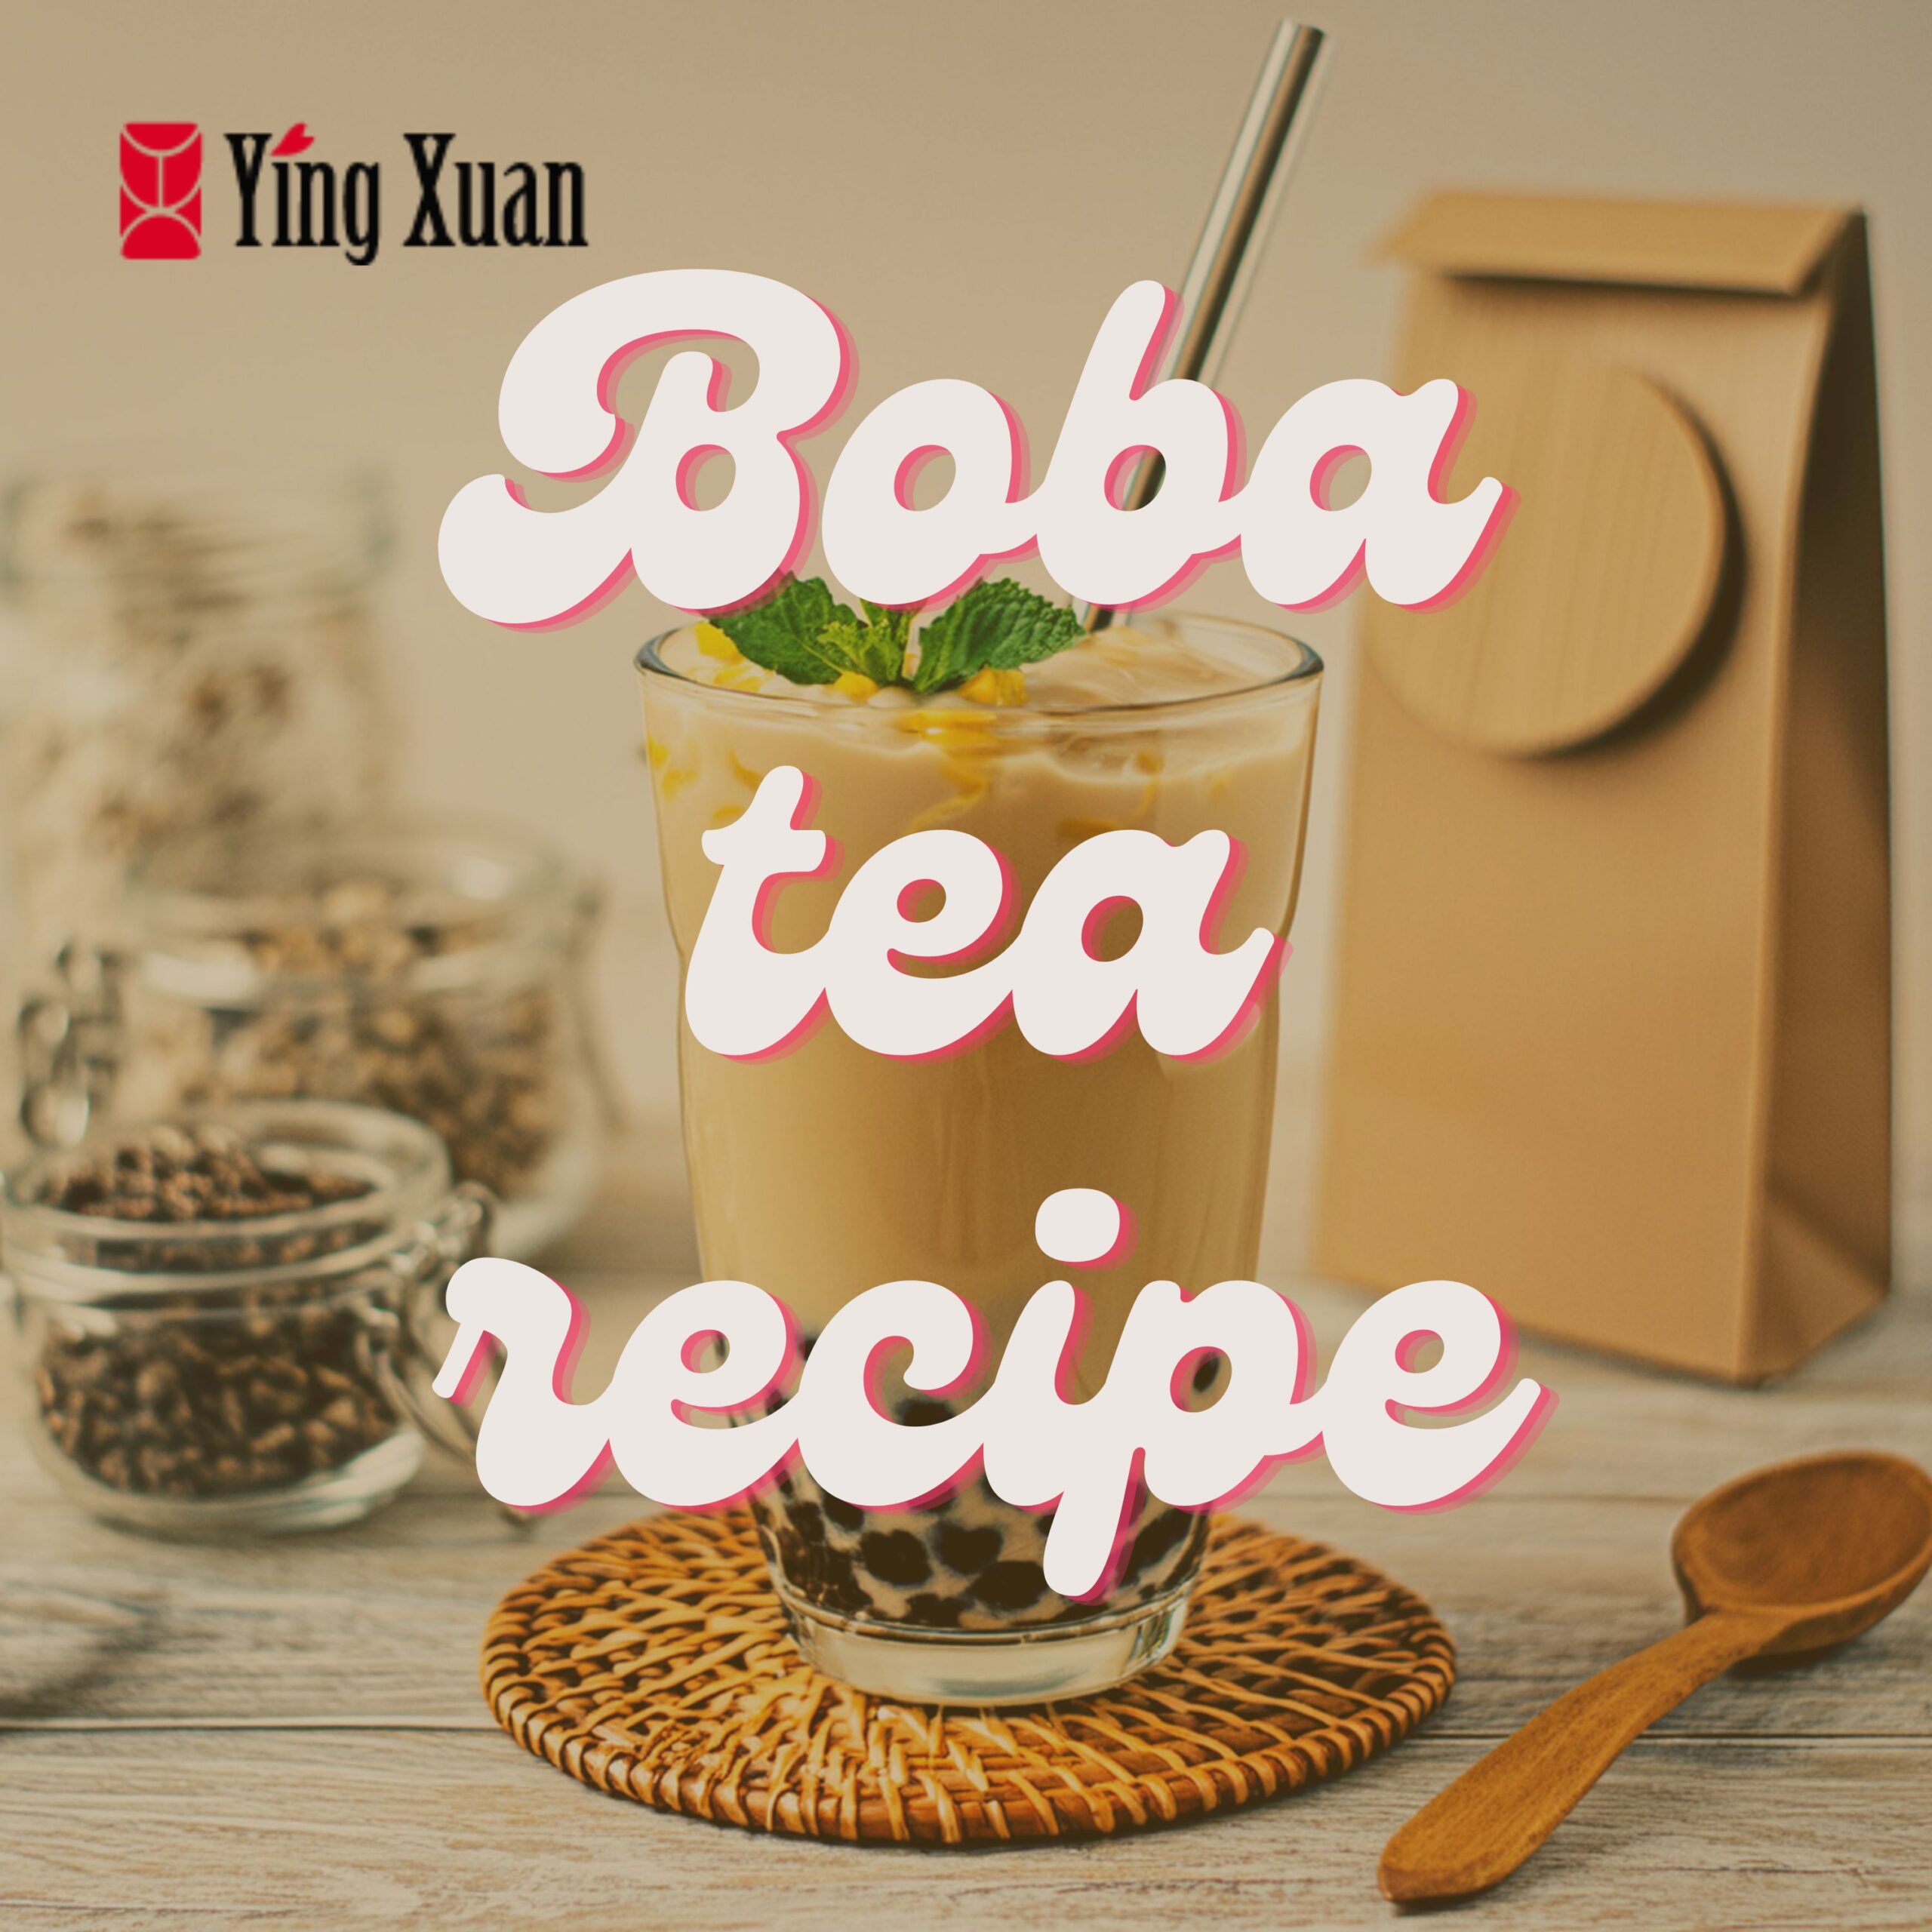 Boba tea recipe